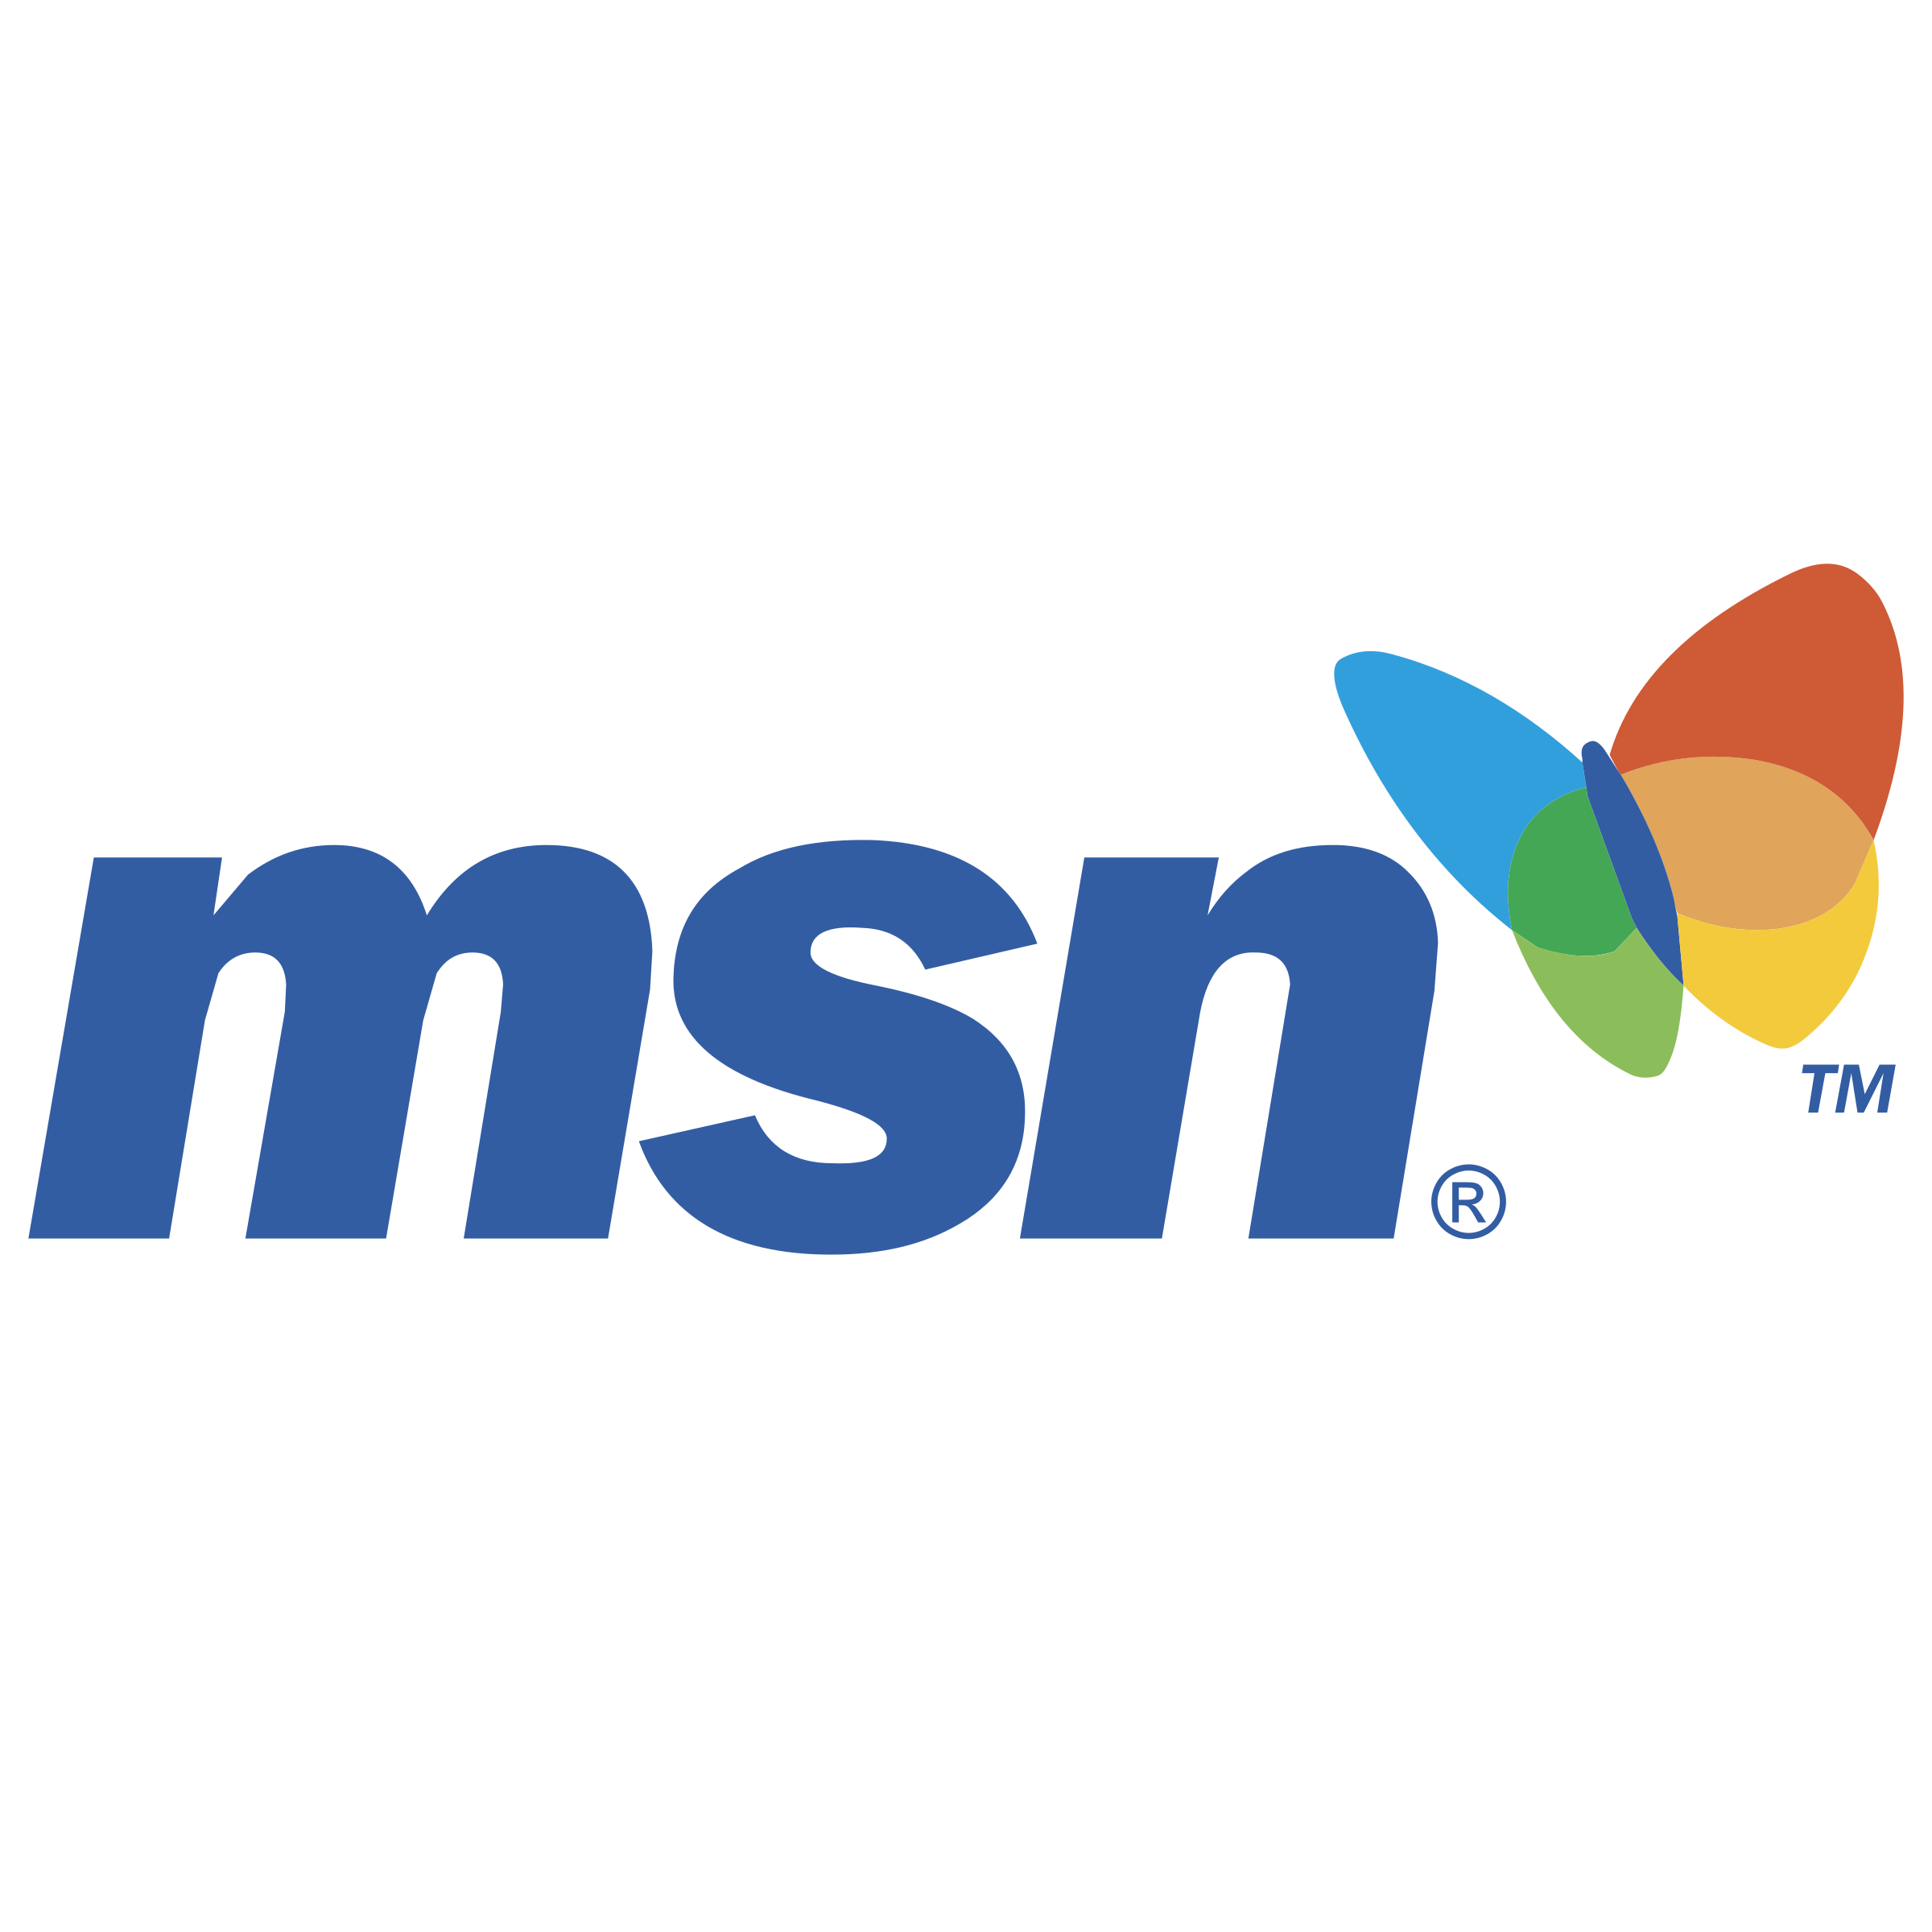 Live messenger. Msn. Msn значок. Лого МСН. Логотип msn (Microsoft Network).